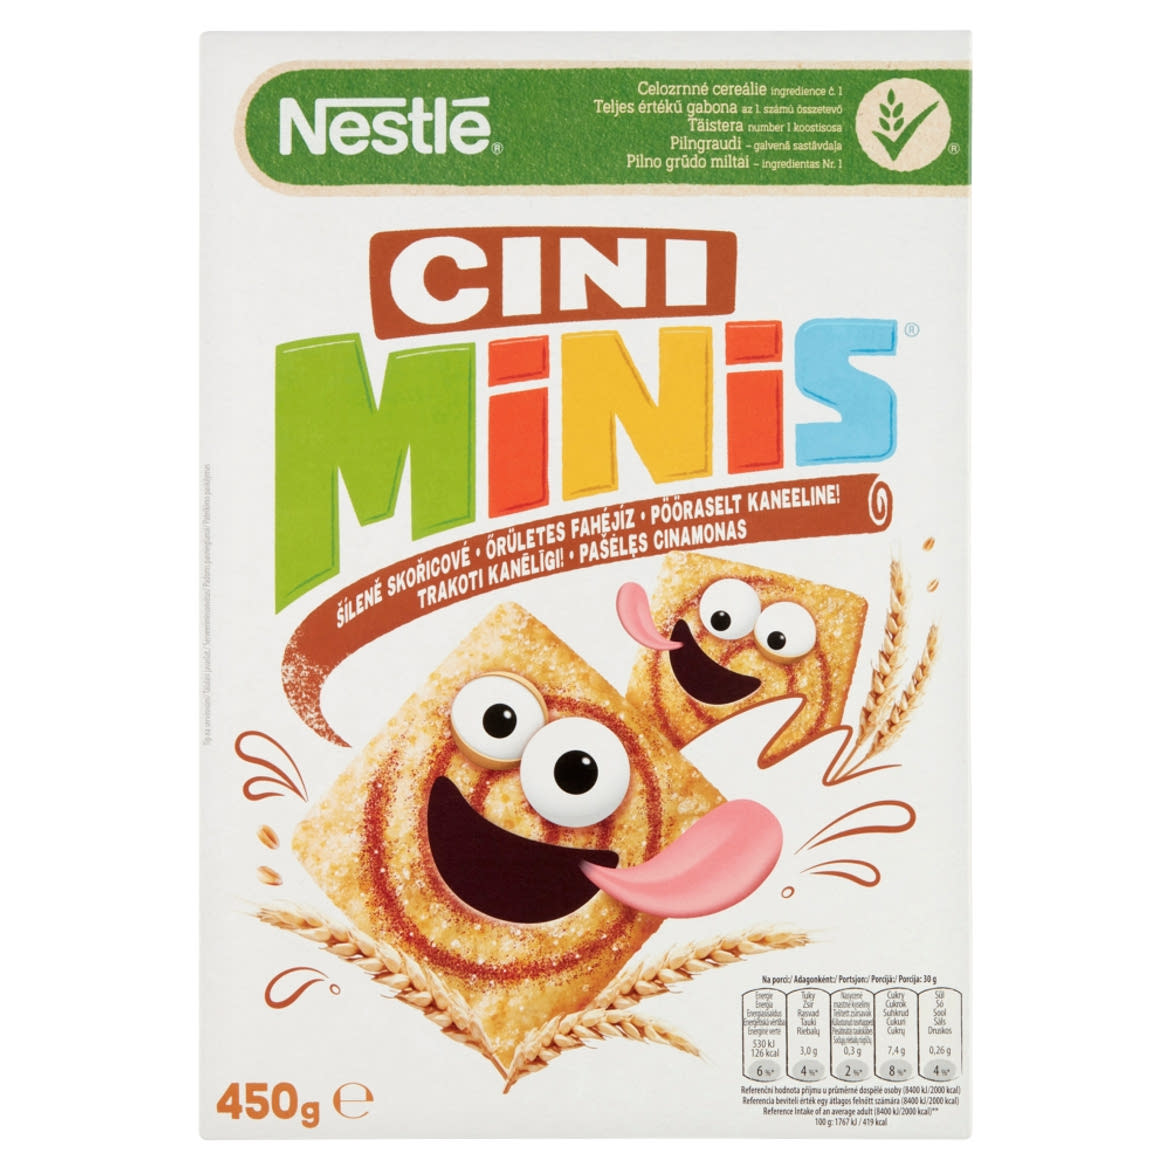 Nestlé Cini Minis ropogós, fahéjas gabonapehely teljes kiőrlésű búzával